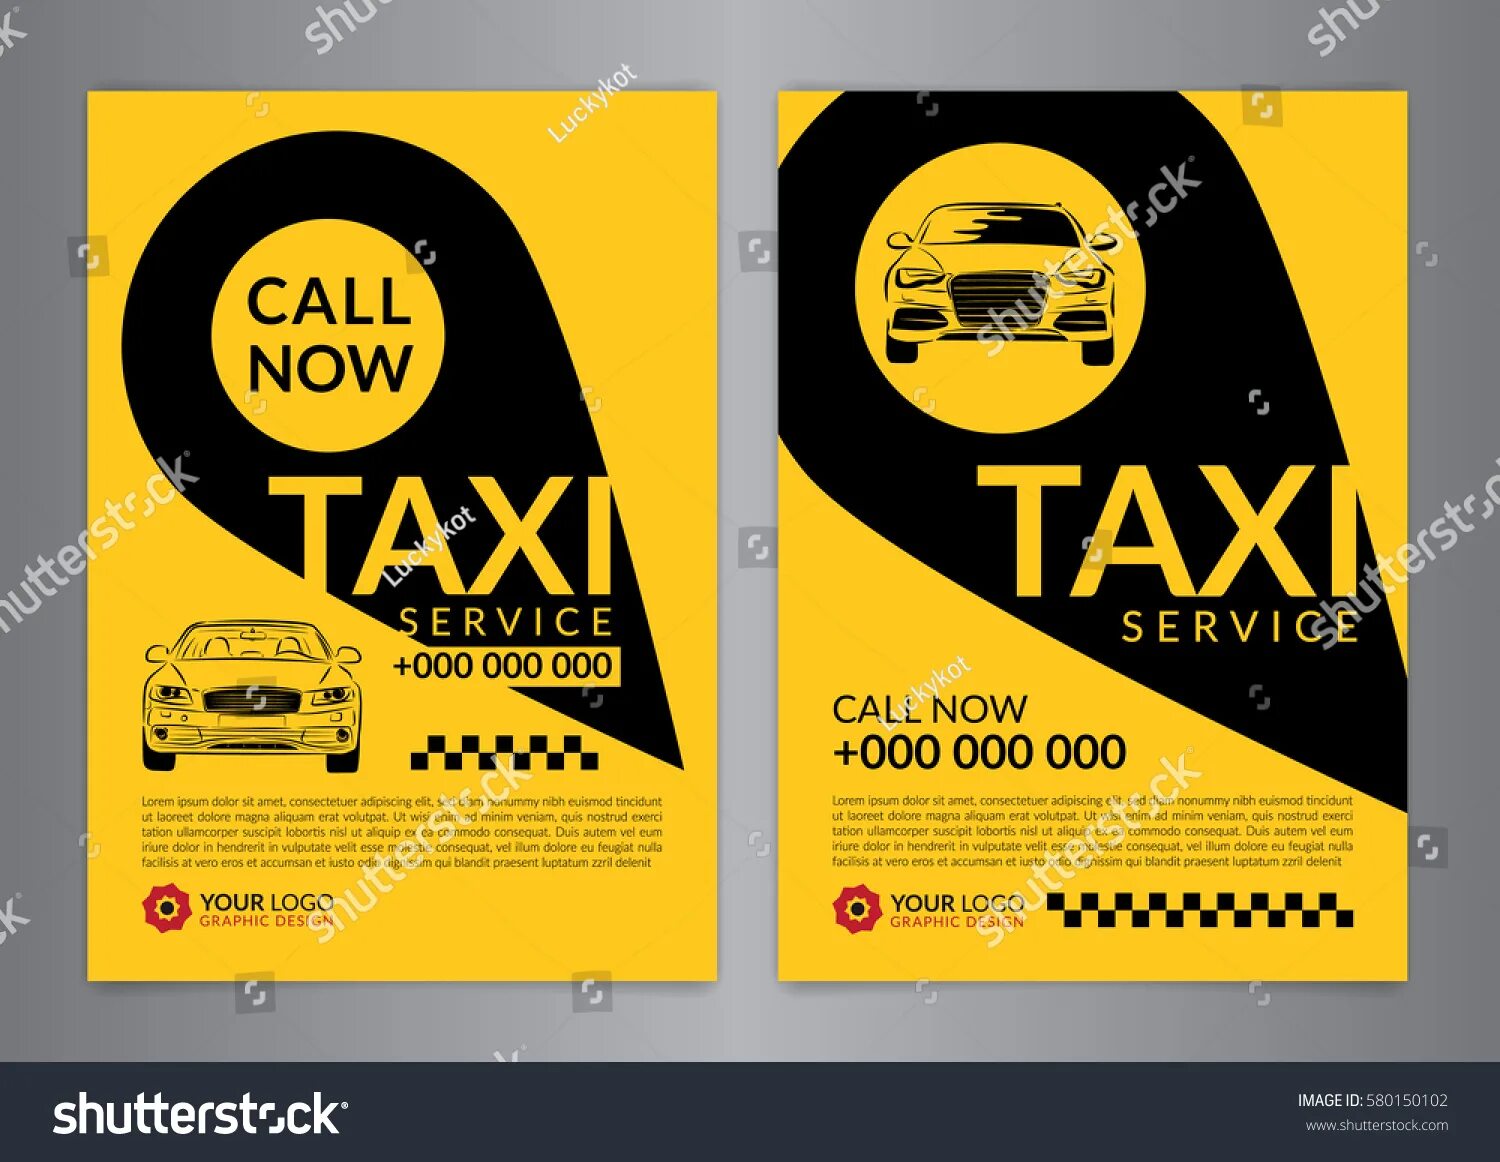 Такси колл. Листовка такси. Визитка такси. Рекламная листовка такси. Флаер такси.